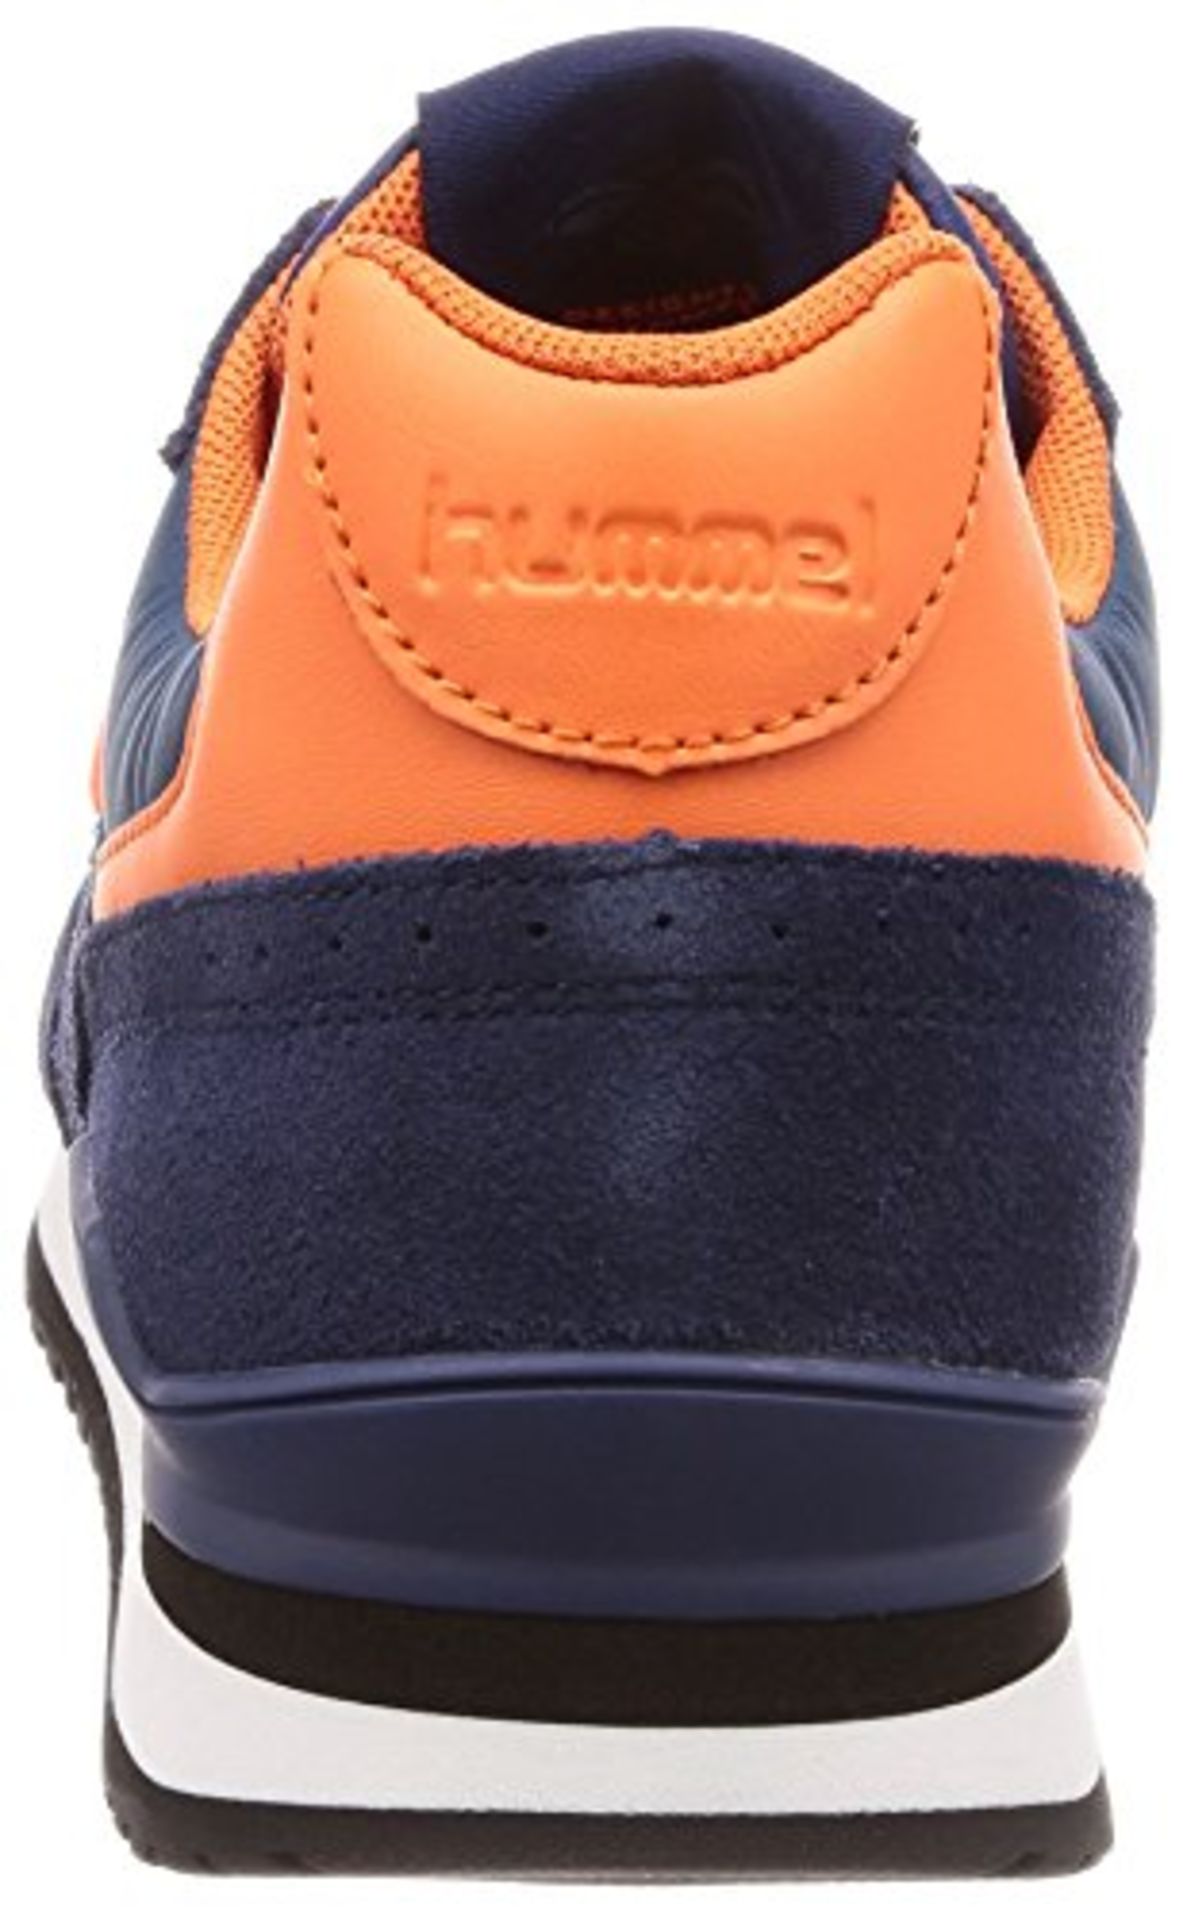 1 x hummel Marathona Trainers Shoes Dark Blue, HM201999, Peacoat, 42 Size: 42 EU | EAN: 57004948785 - Image 2 of 7